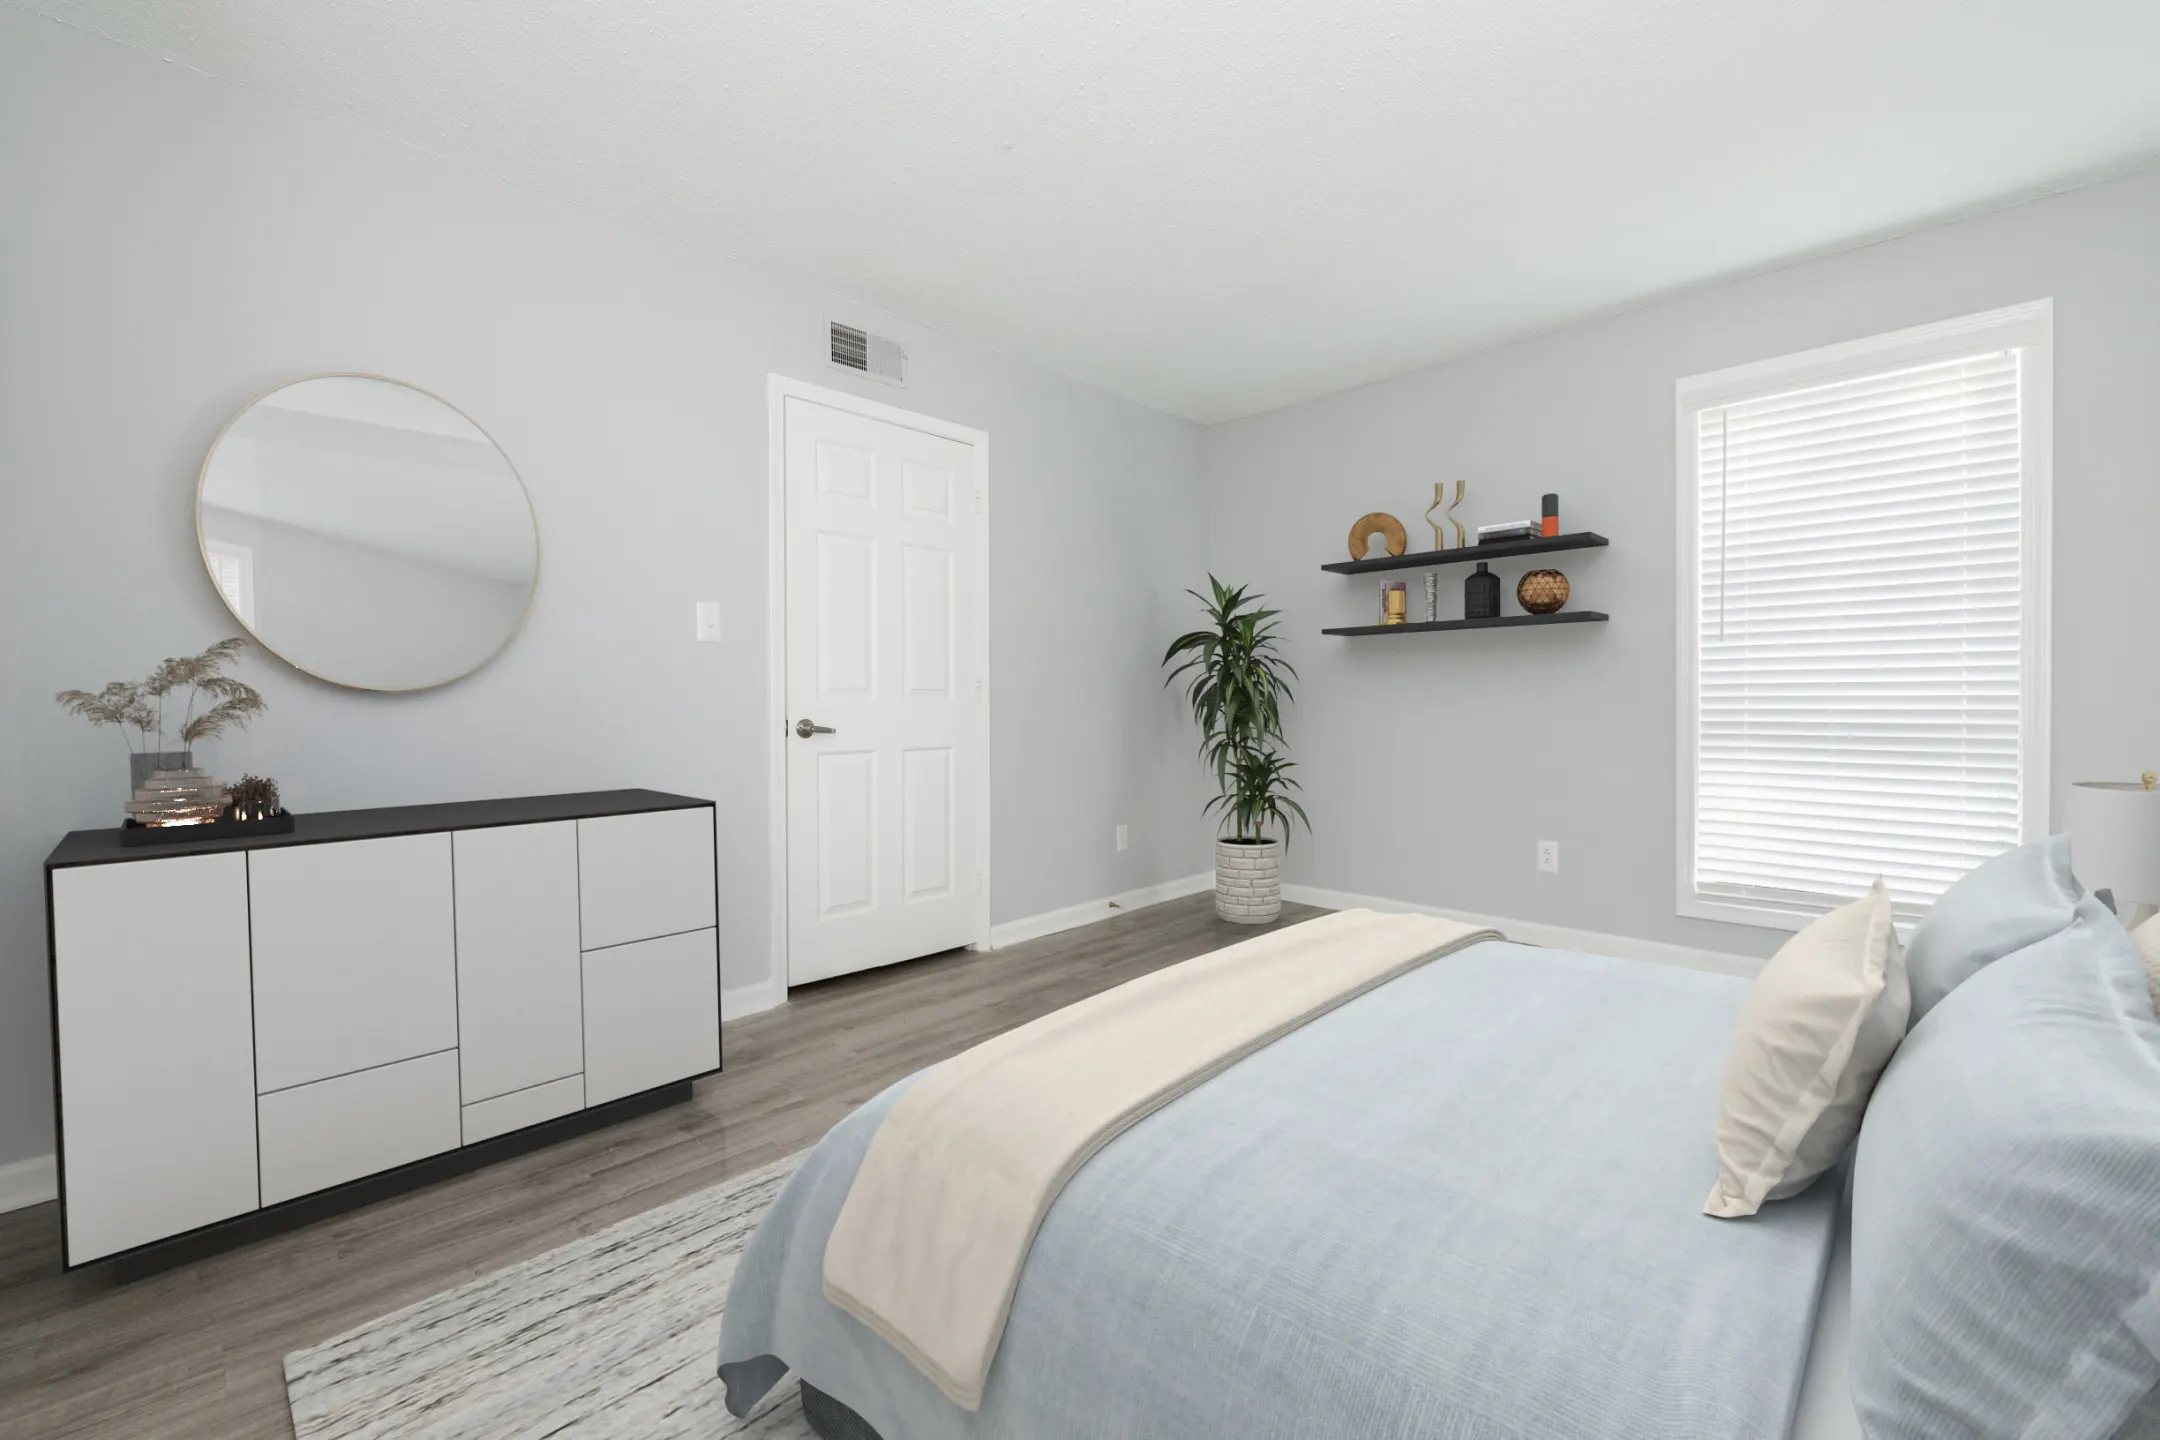 Bedroom - Edition Apartment Homes - Charlotte, NC